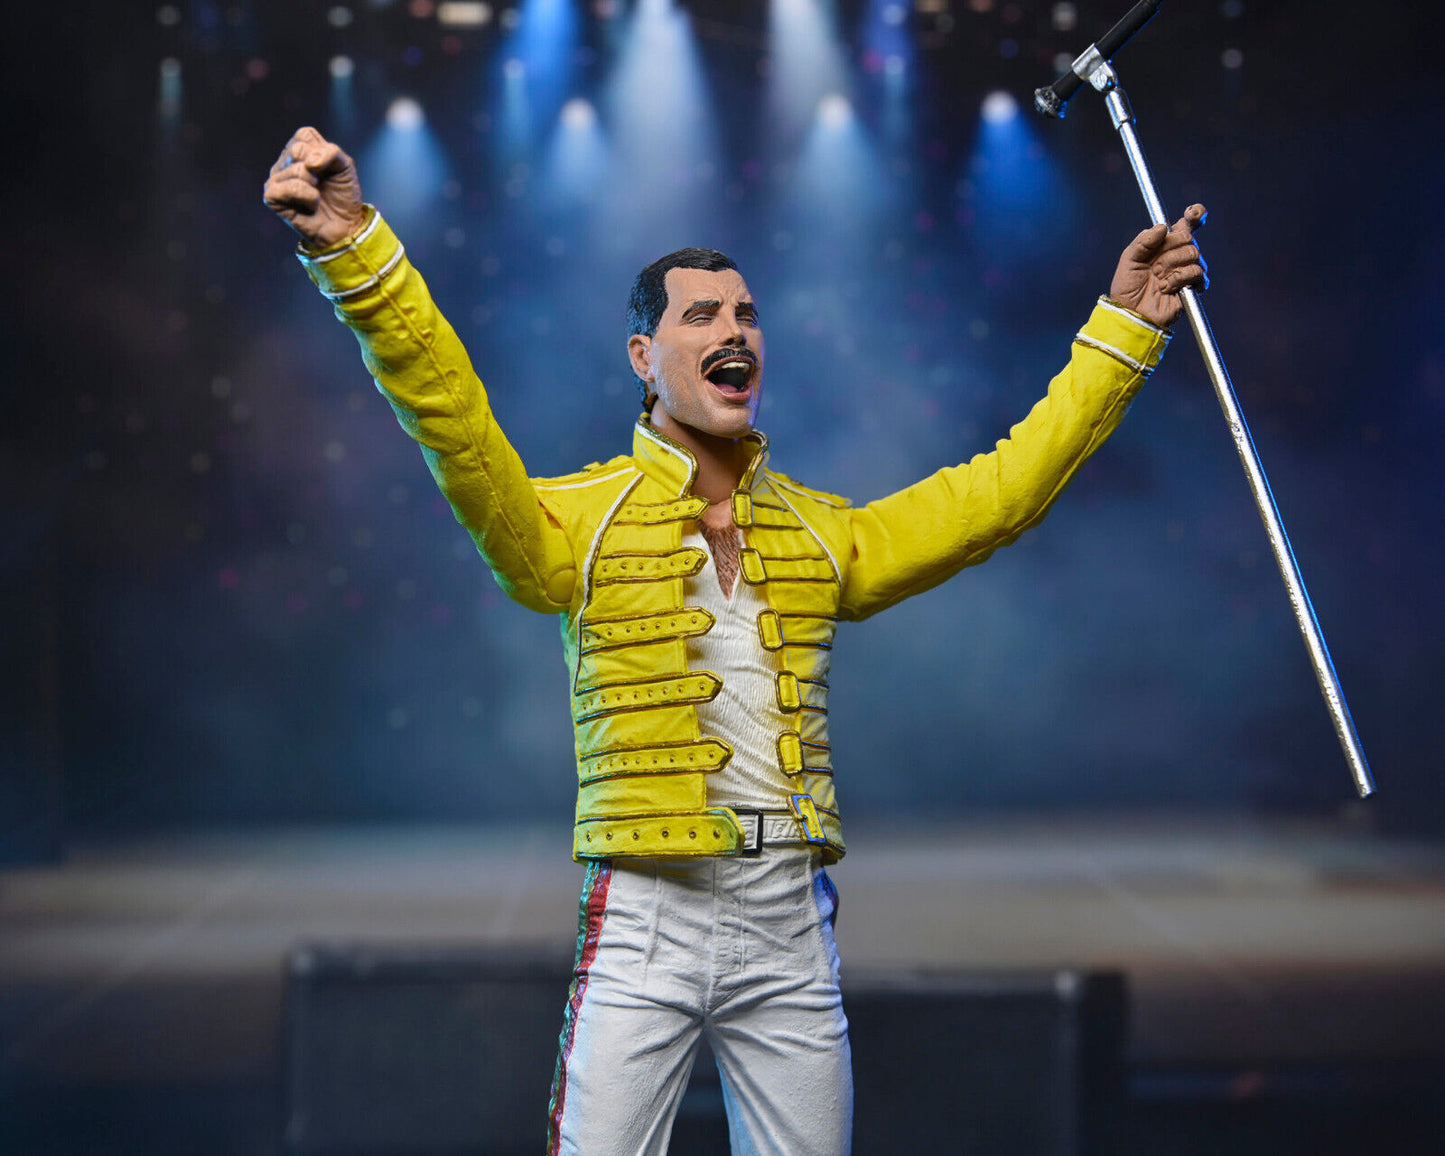 Figurine NECA - Freddie Mercury Yellow Jacket